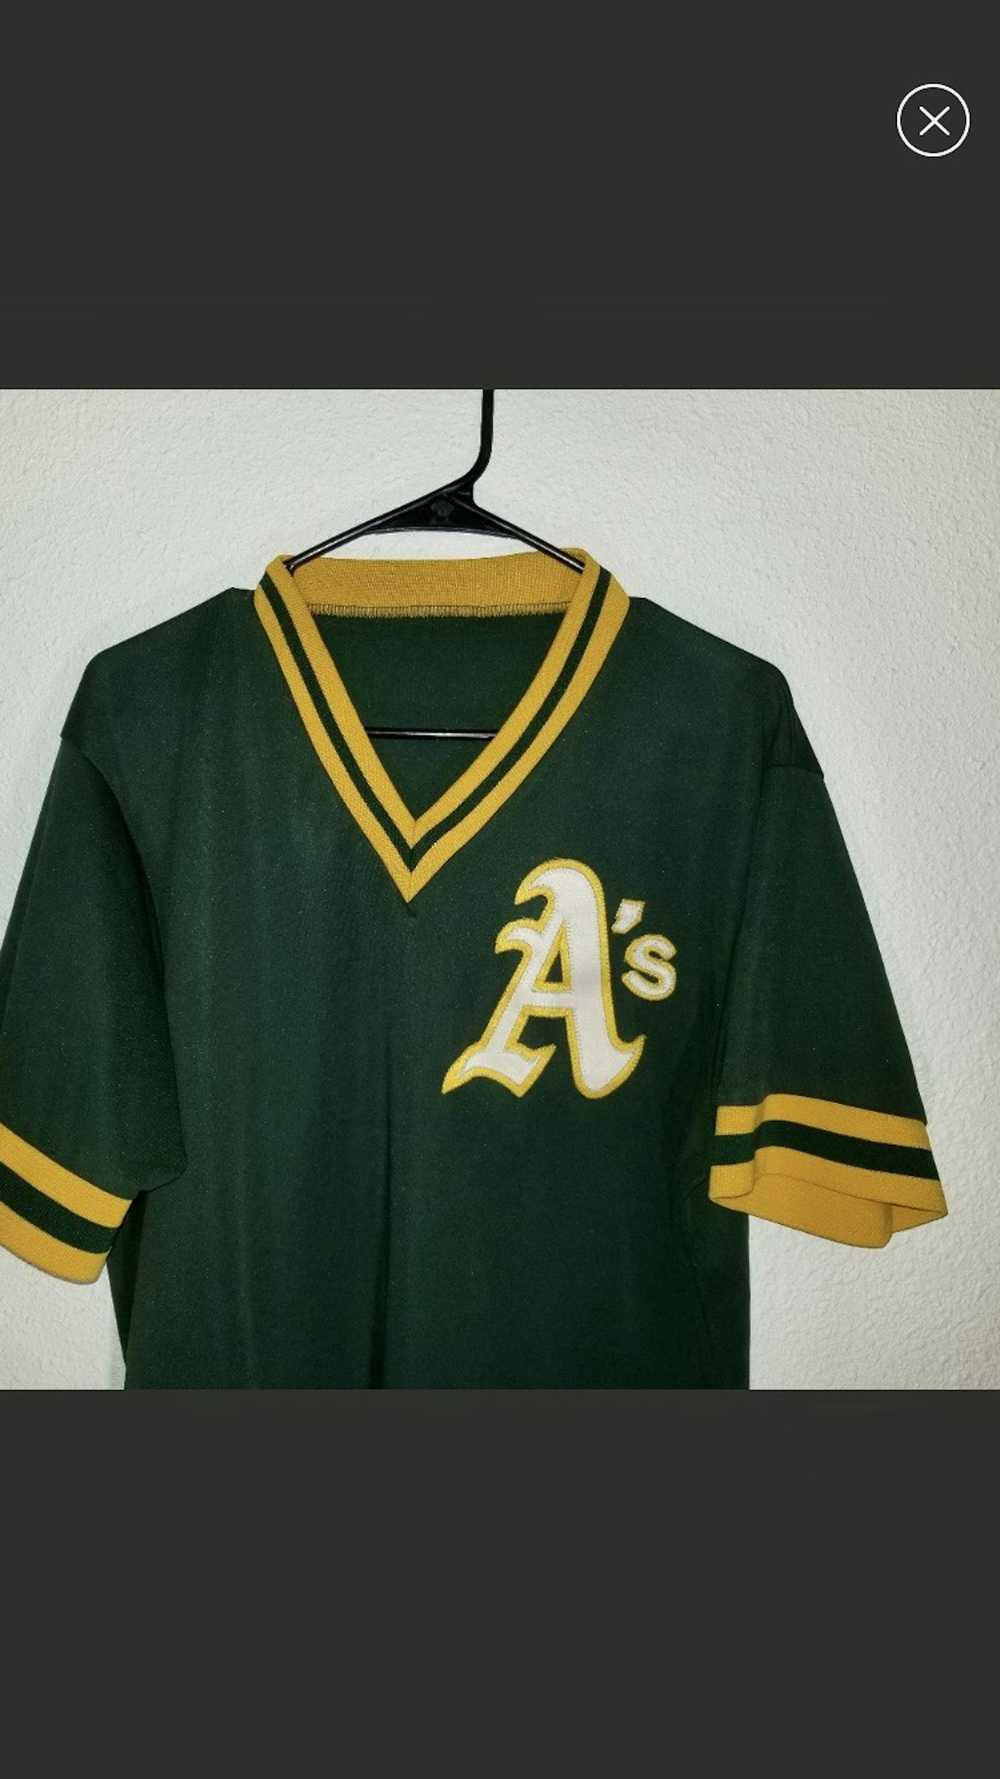 MLB Oakland A’s retro jersey style - image 2